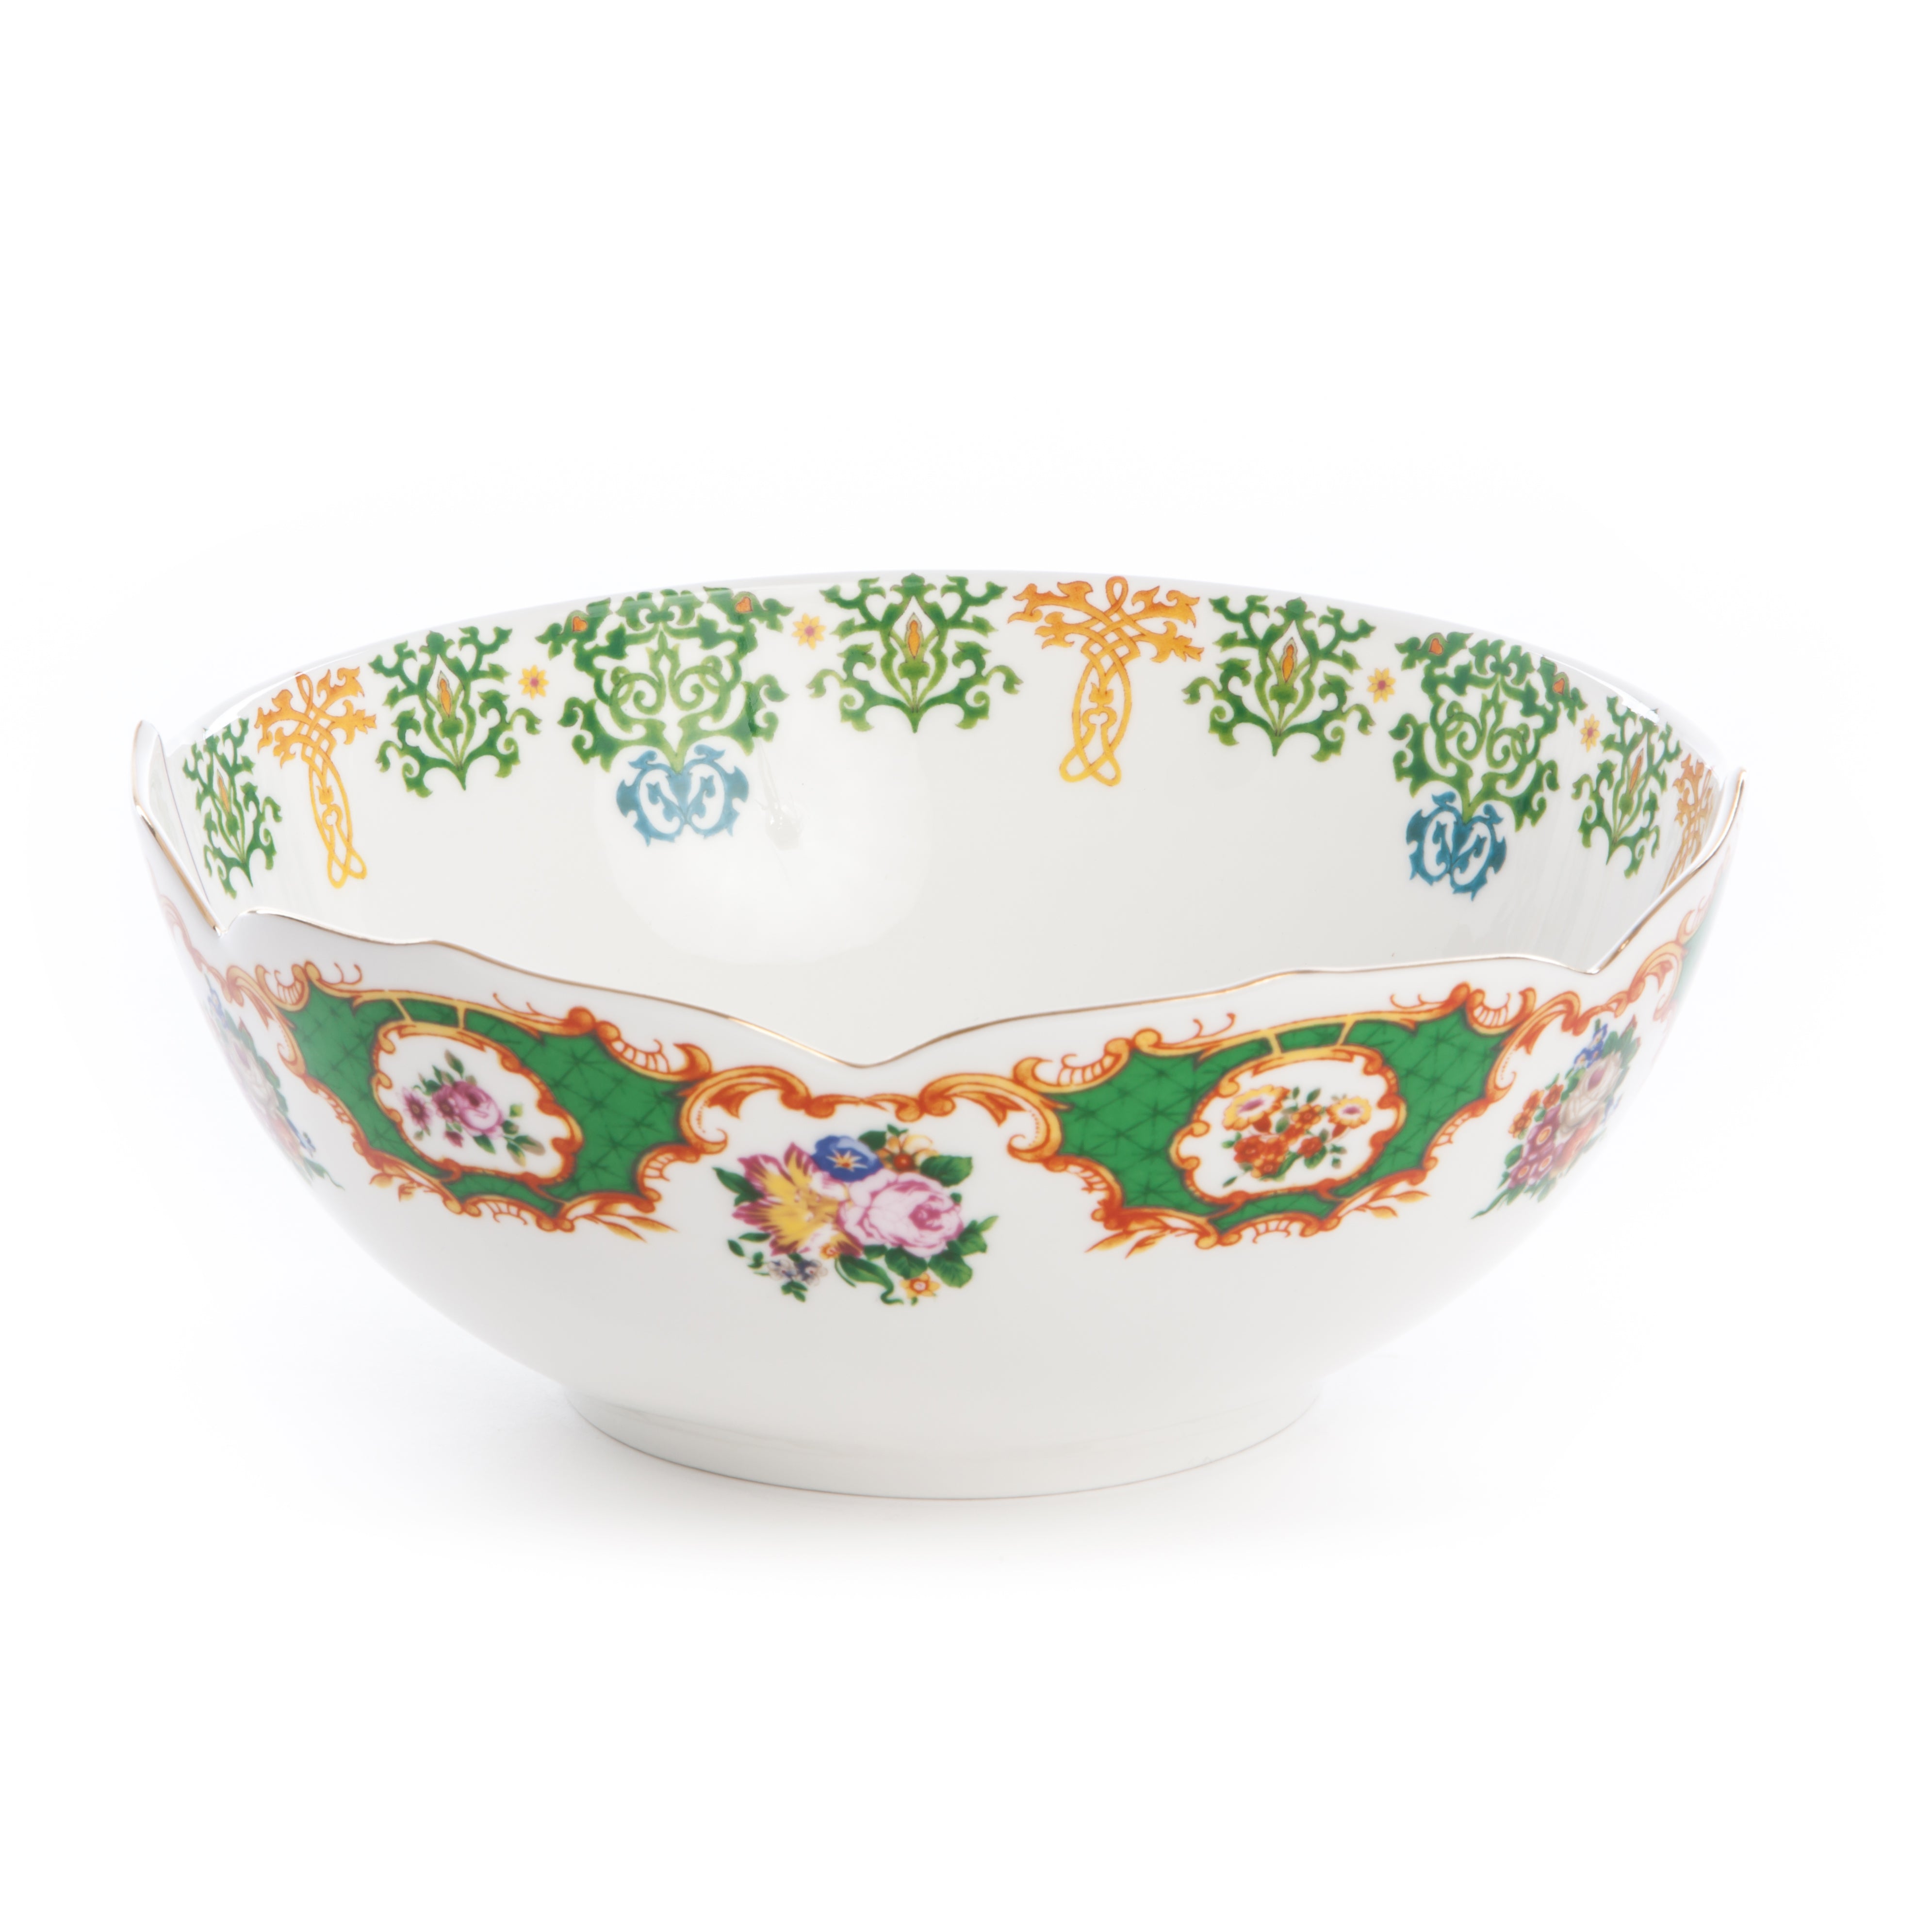 Seletti Hybrid Zaira Porcelain salad bowl